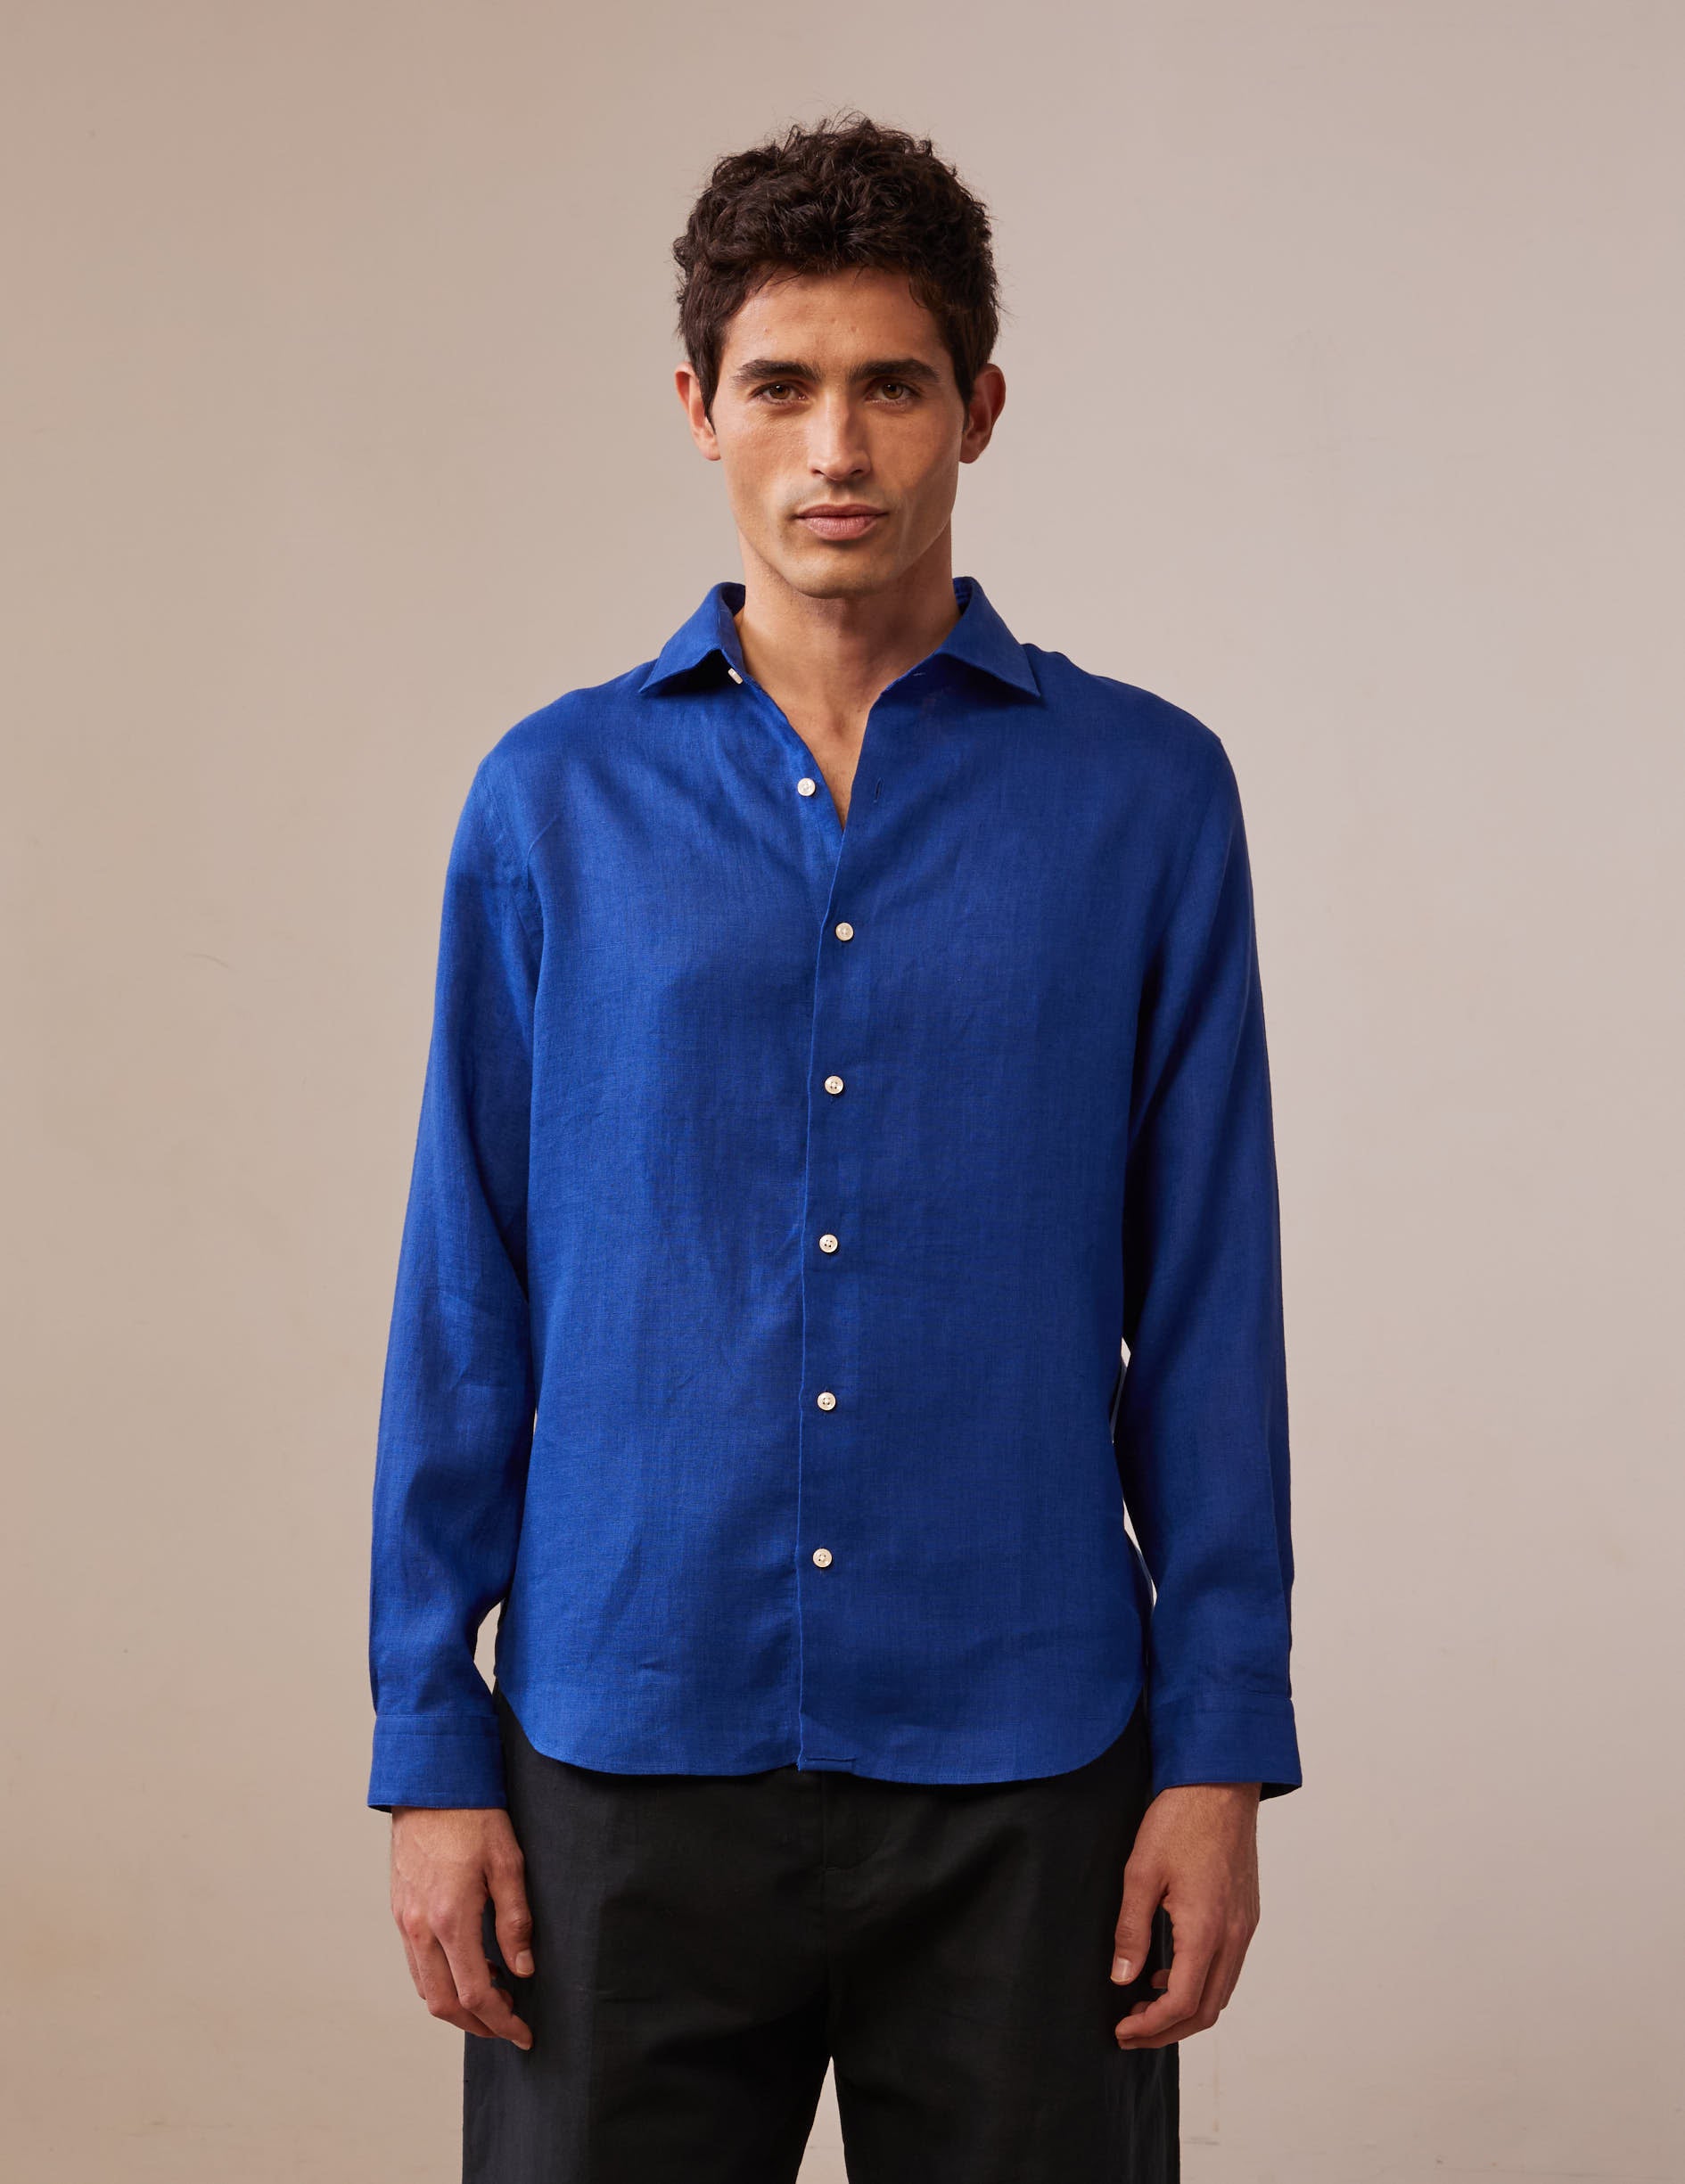 Aristote blue linen shirt - Linen - Italian Collar